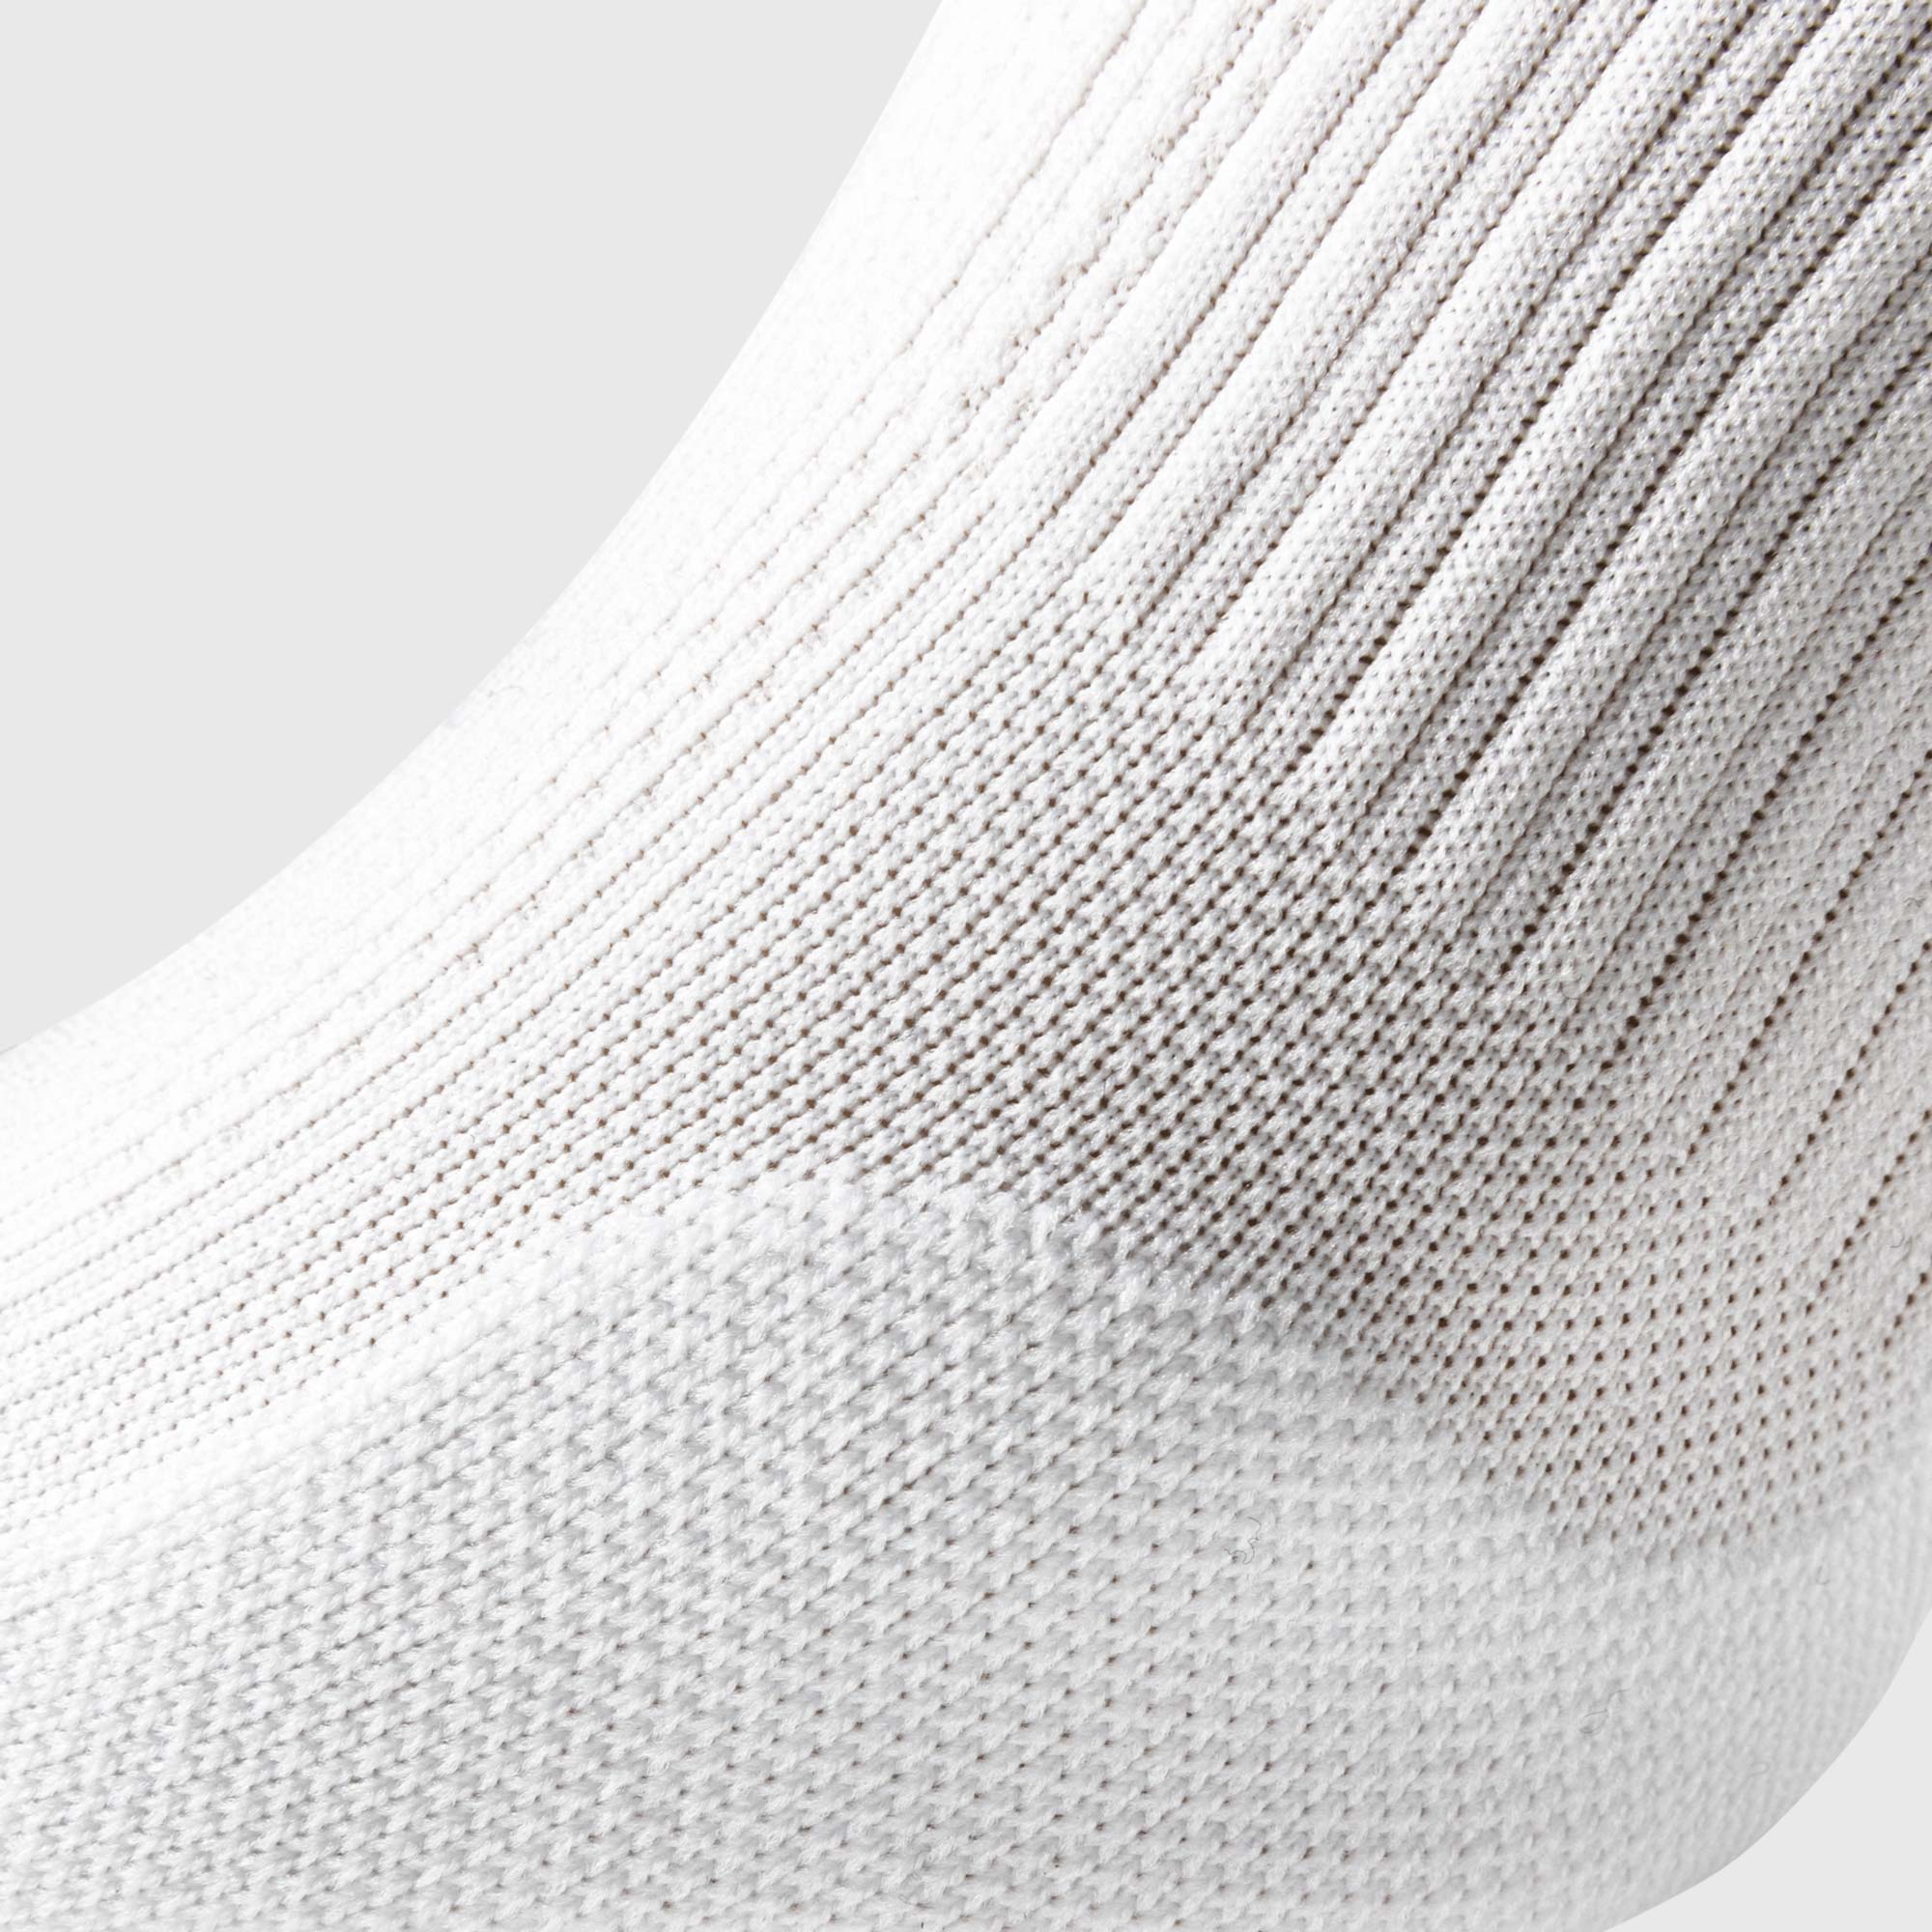 liiteGuard ULTRALIGHT SOCK Medium socks WHITE